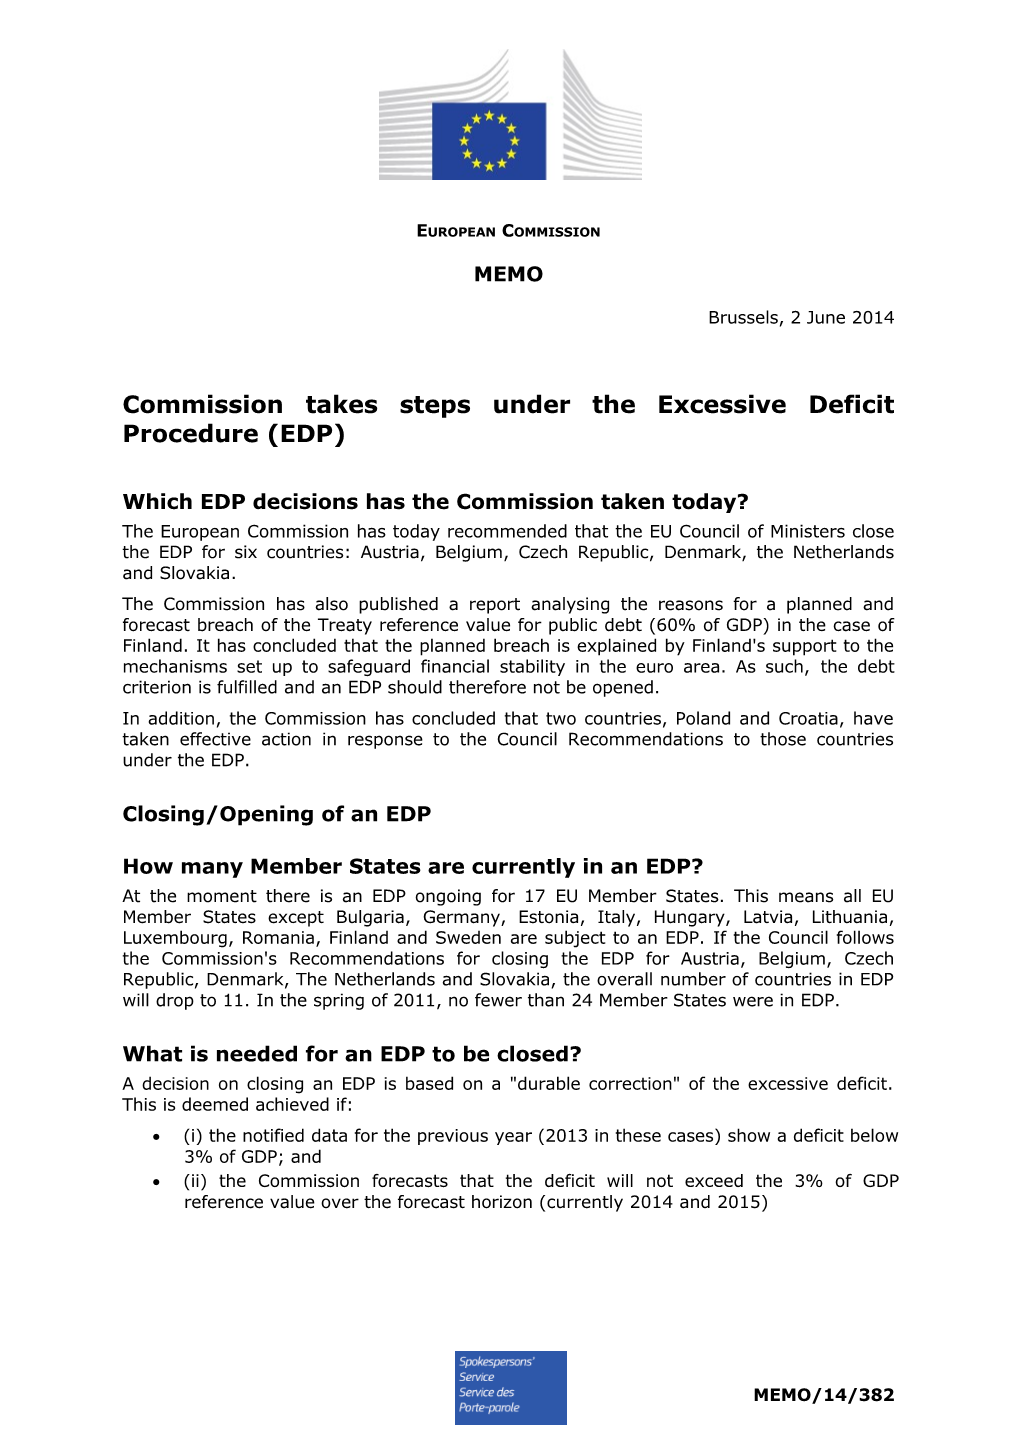 Commission Takes Steps Under the Excessive Deficit Procedure (EDP)